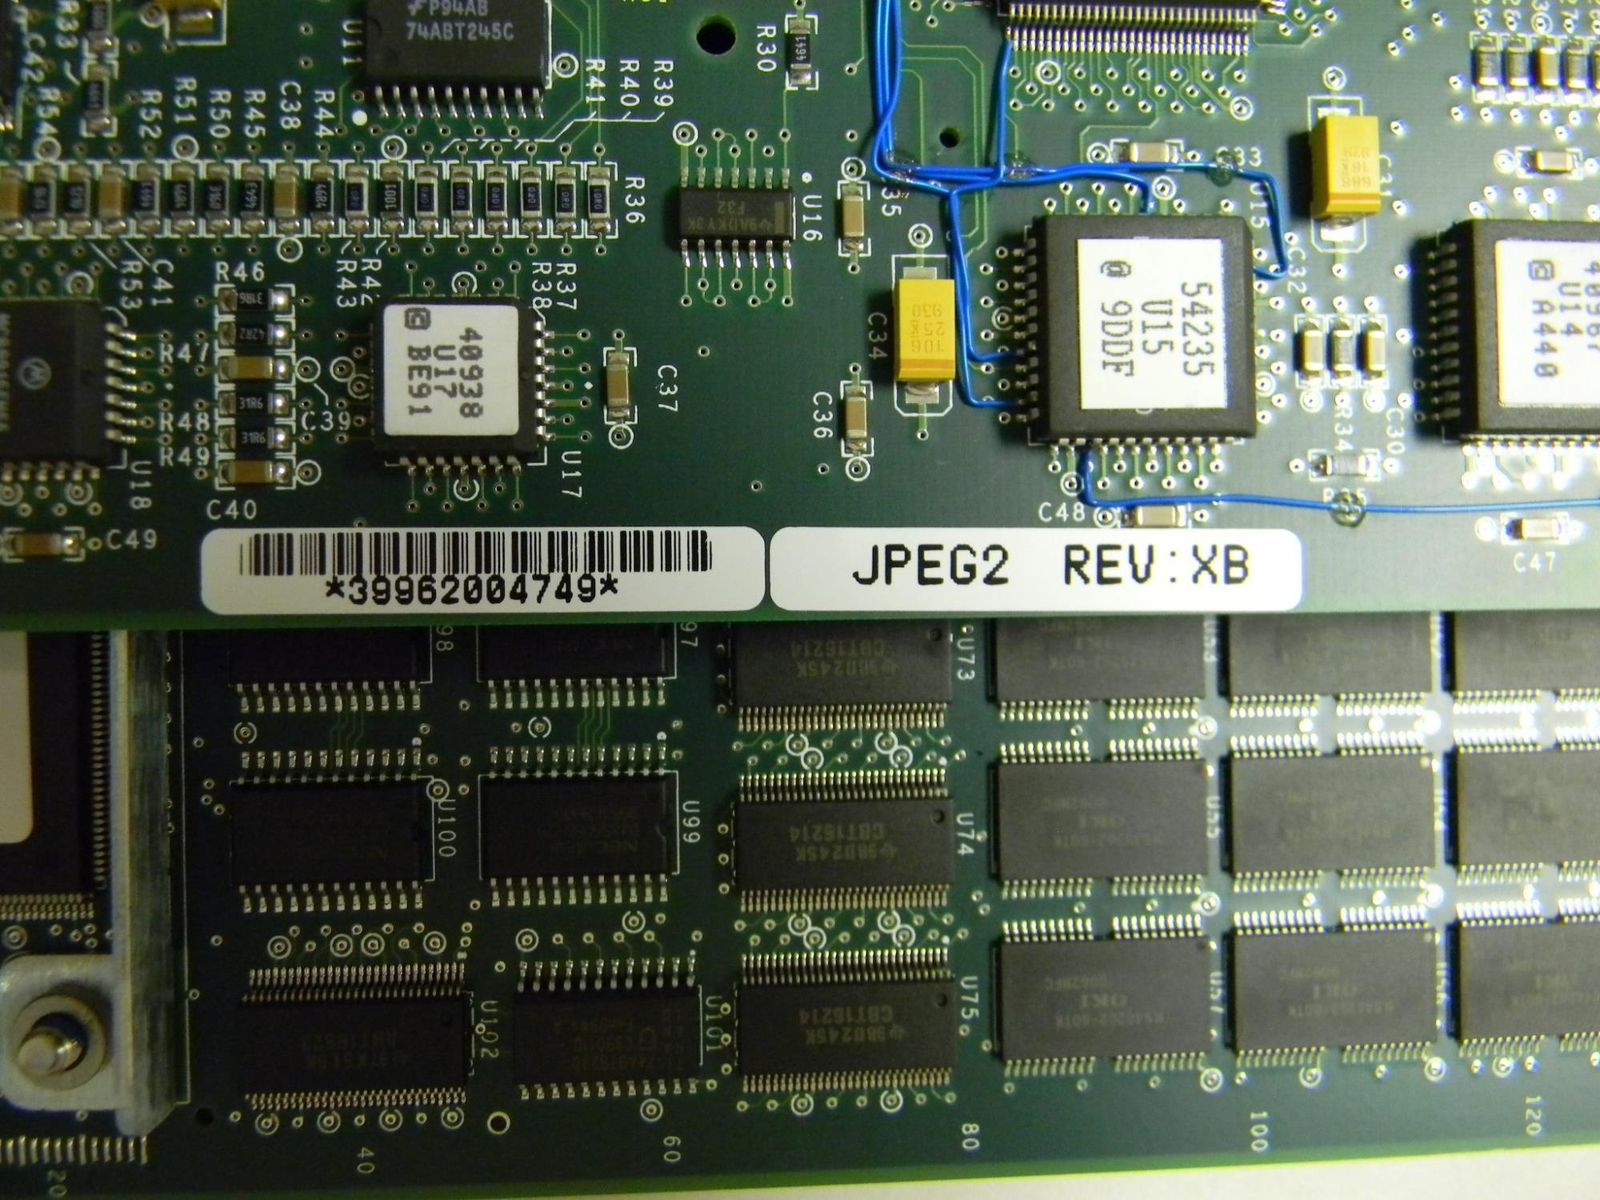 Acuson Sequoia C256 Ultrasound System 41672 DCI 2 REV. XH JPEG 2 39962 REV XB DIAGNOSTIC ULTRASOUND MACHINES FOR SALE